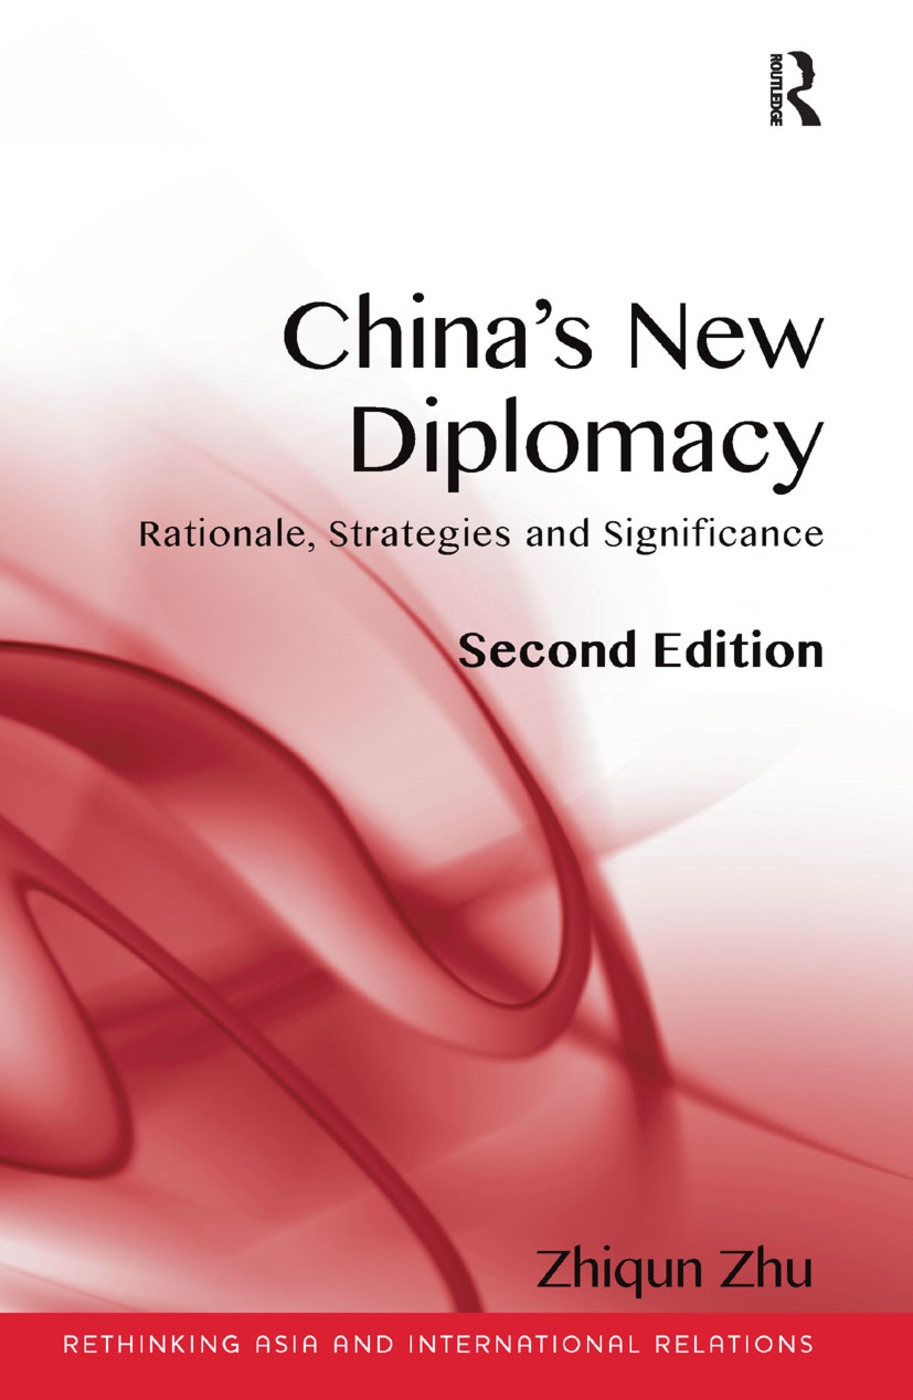 China’s New Diplomacy: Rationale, Strategies and Sigificance. Zhiqun Zhu